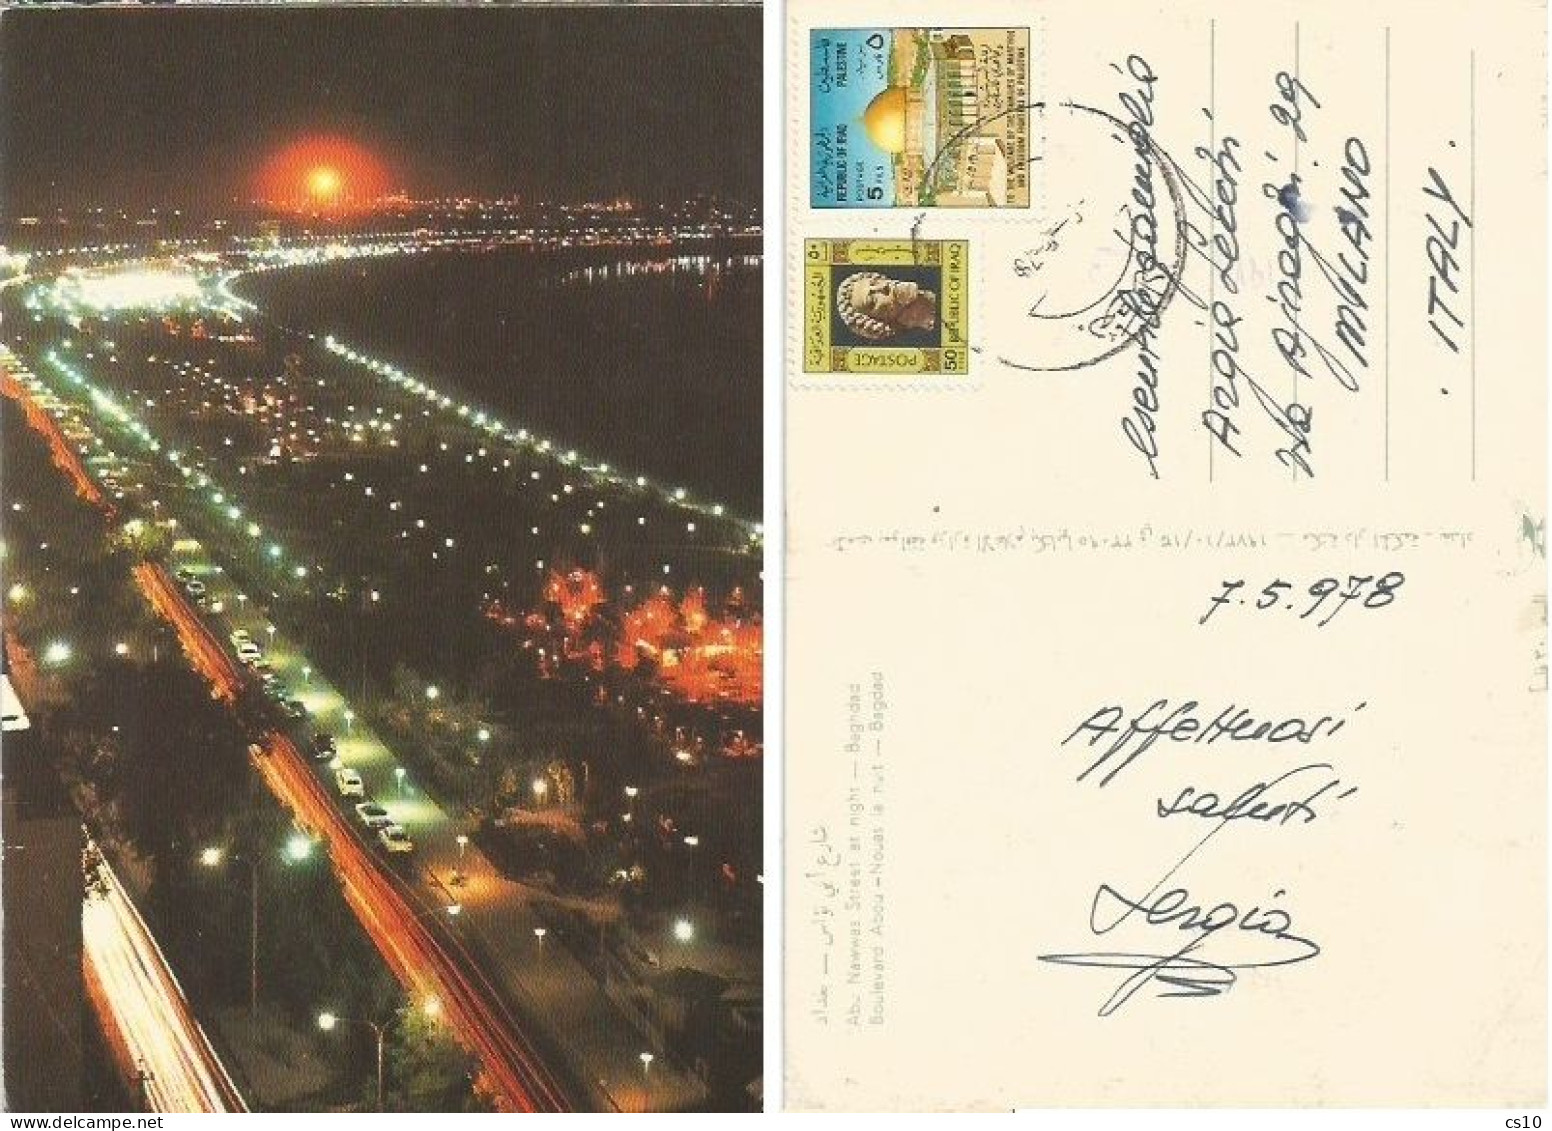 Iraq Irak Baghdad Abu Nawwas Street At Night - Pcard Used 1978 To Italy - Irak